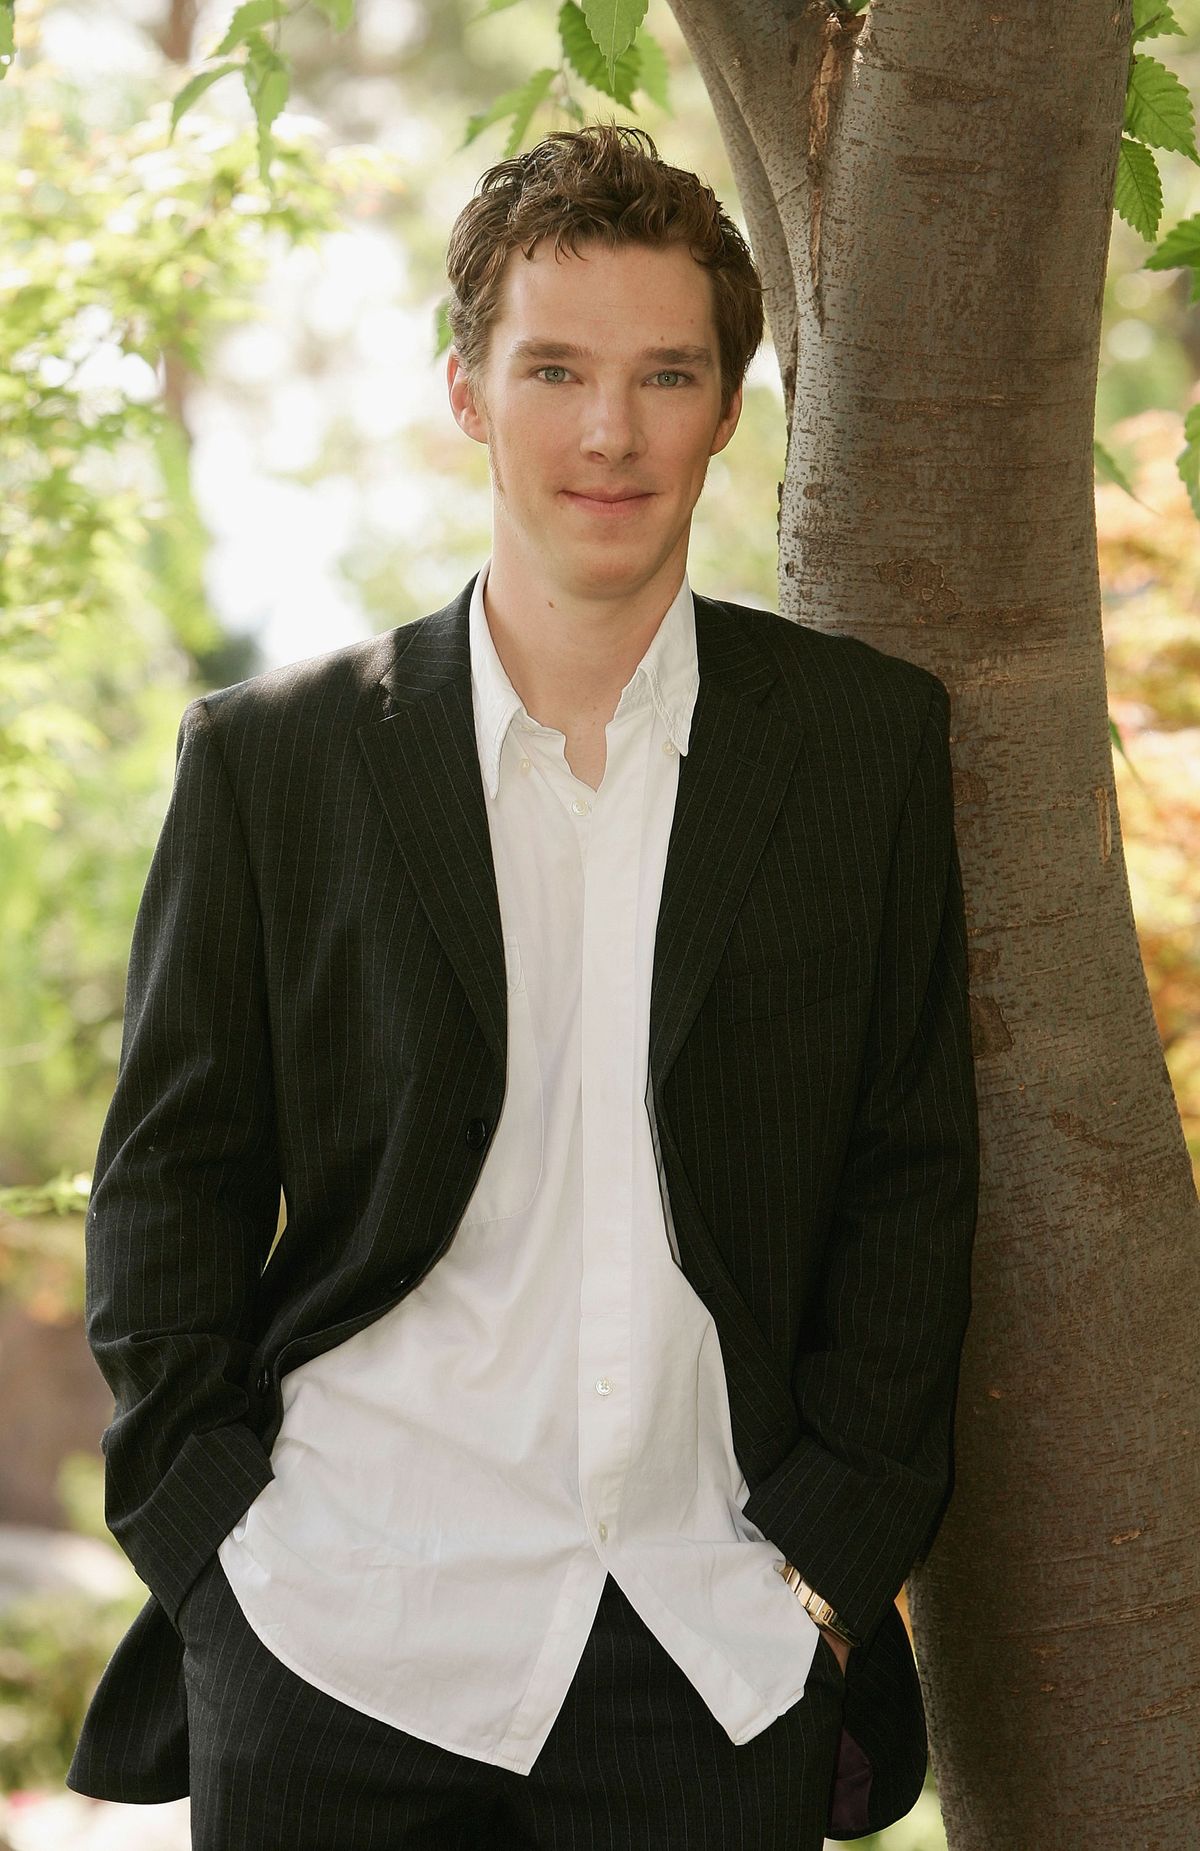 Benedict as a Baby = น่ารักสุด ๆ Duh